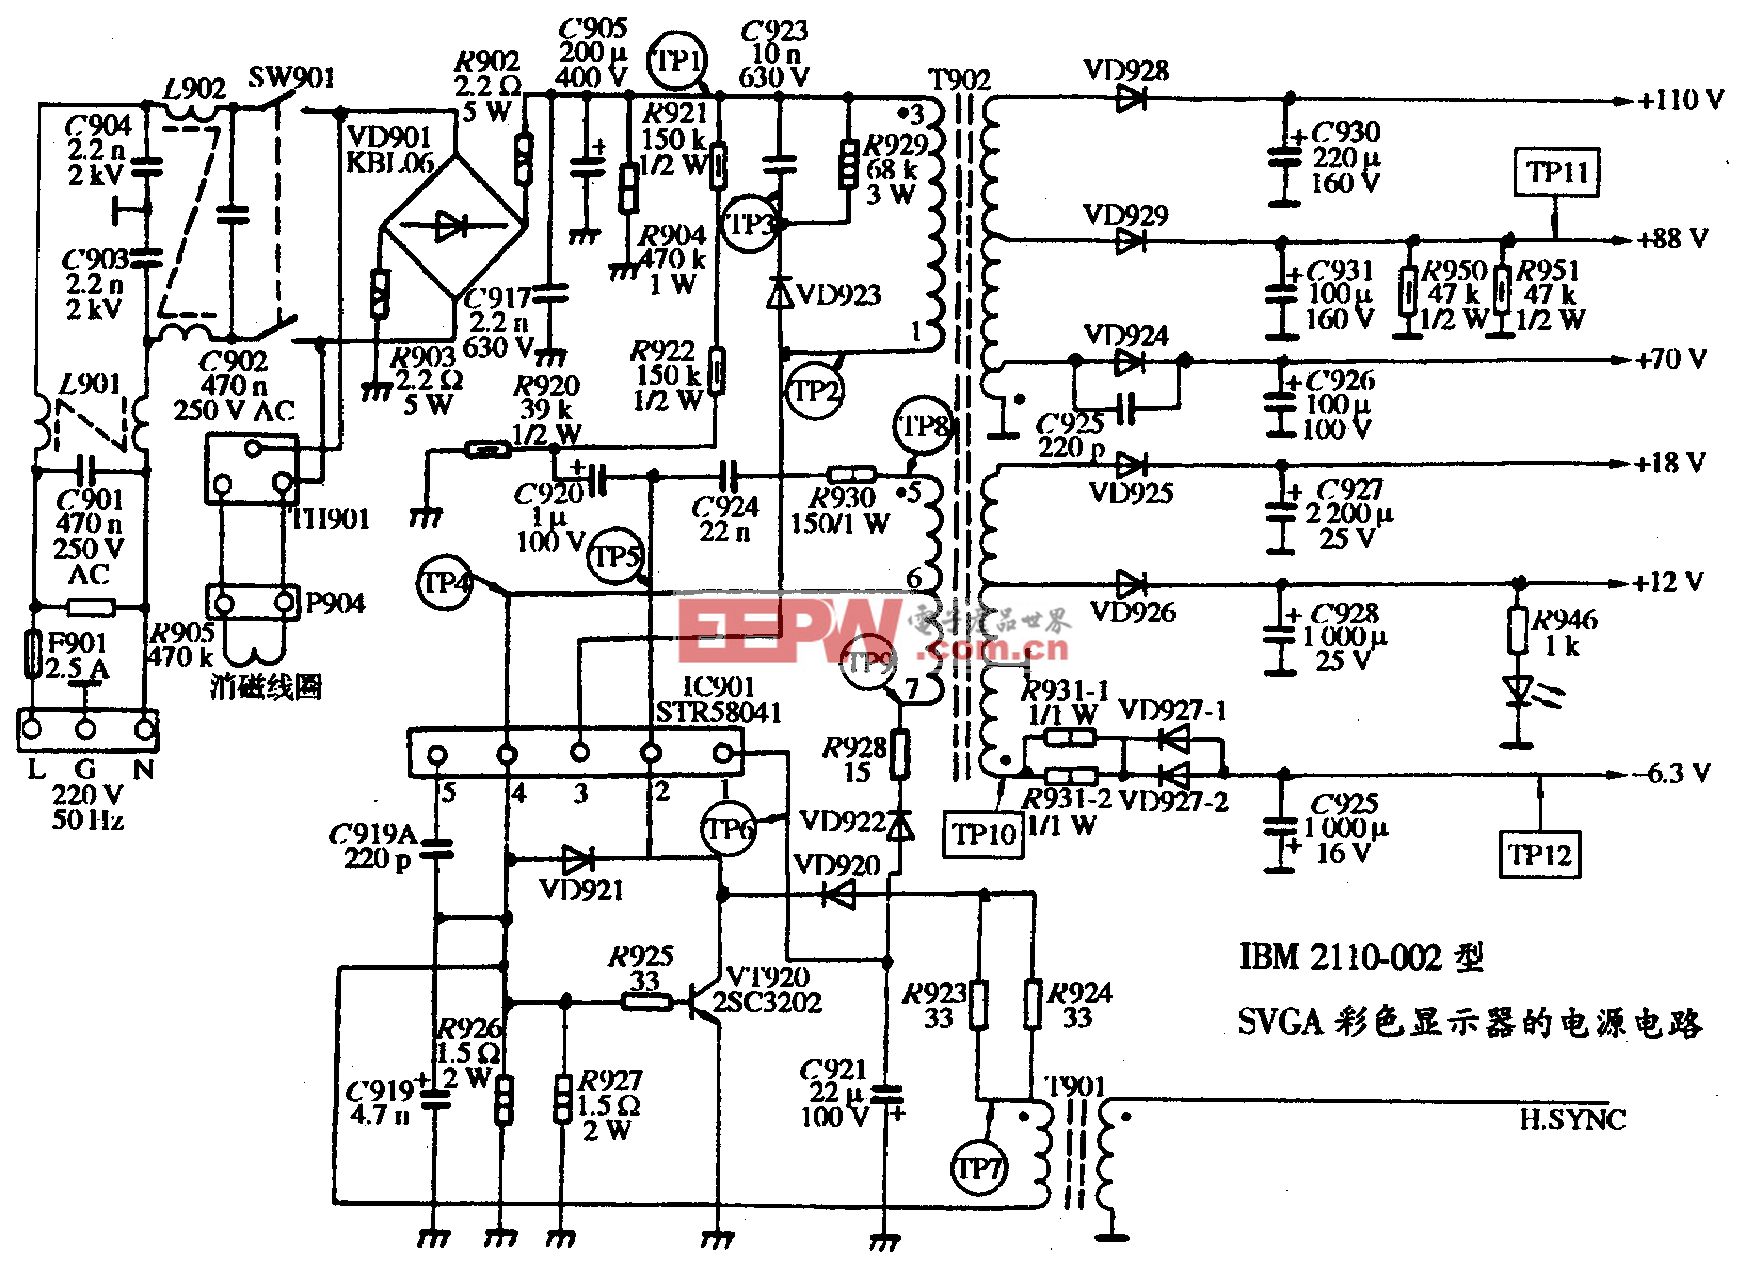 59、IBM 2110-002型SVGA彩色显示器的电源电路图